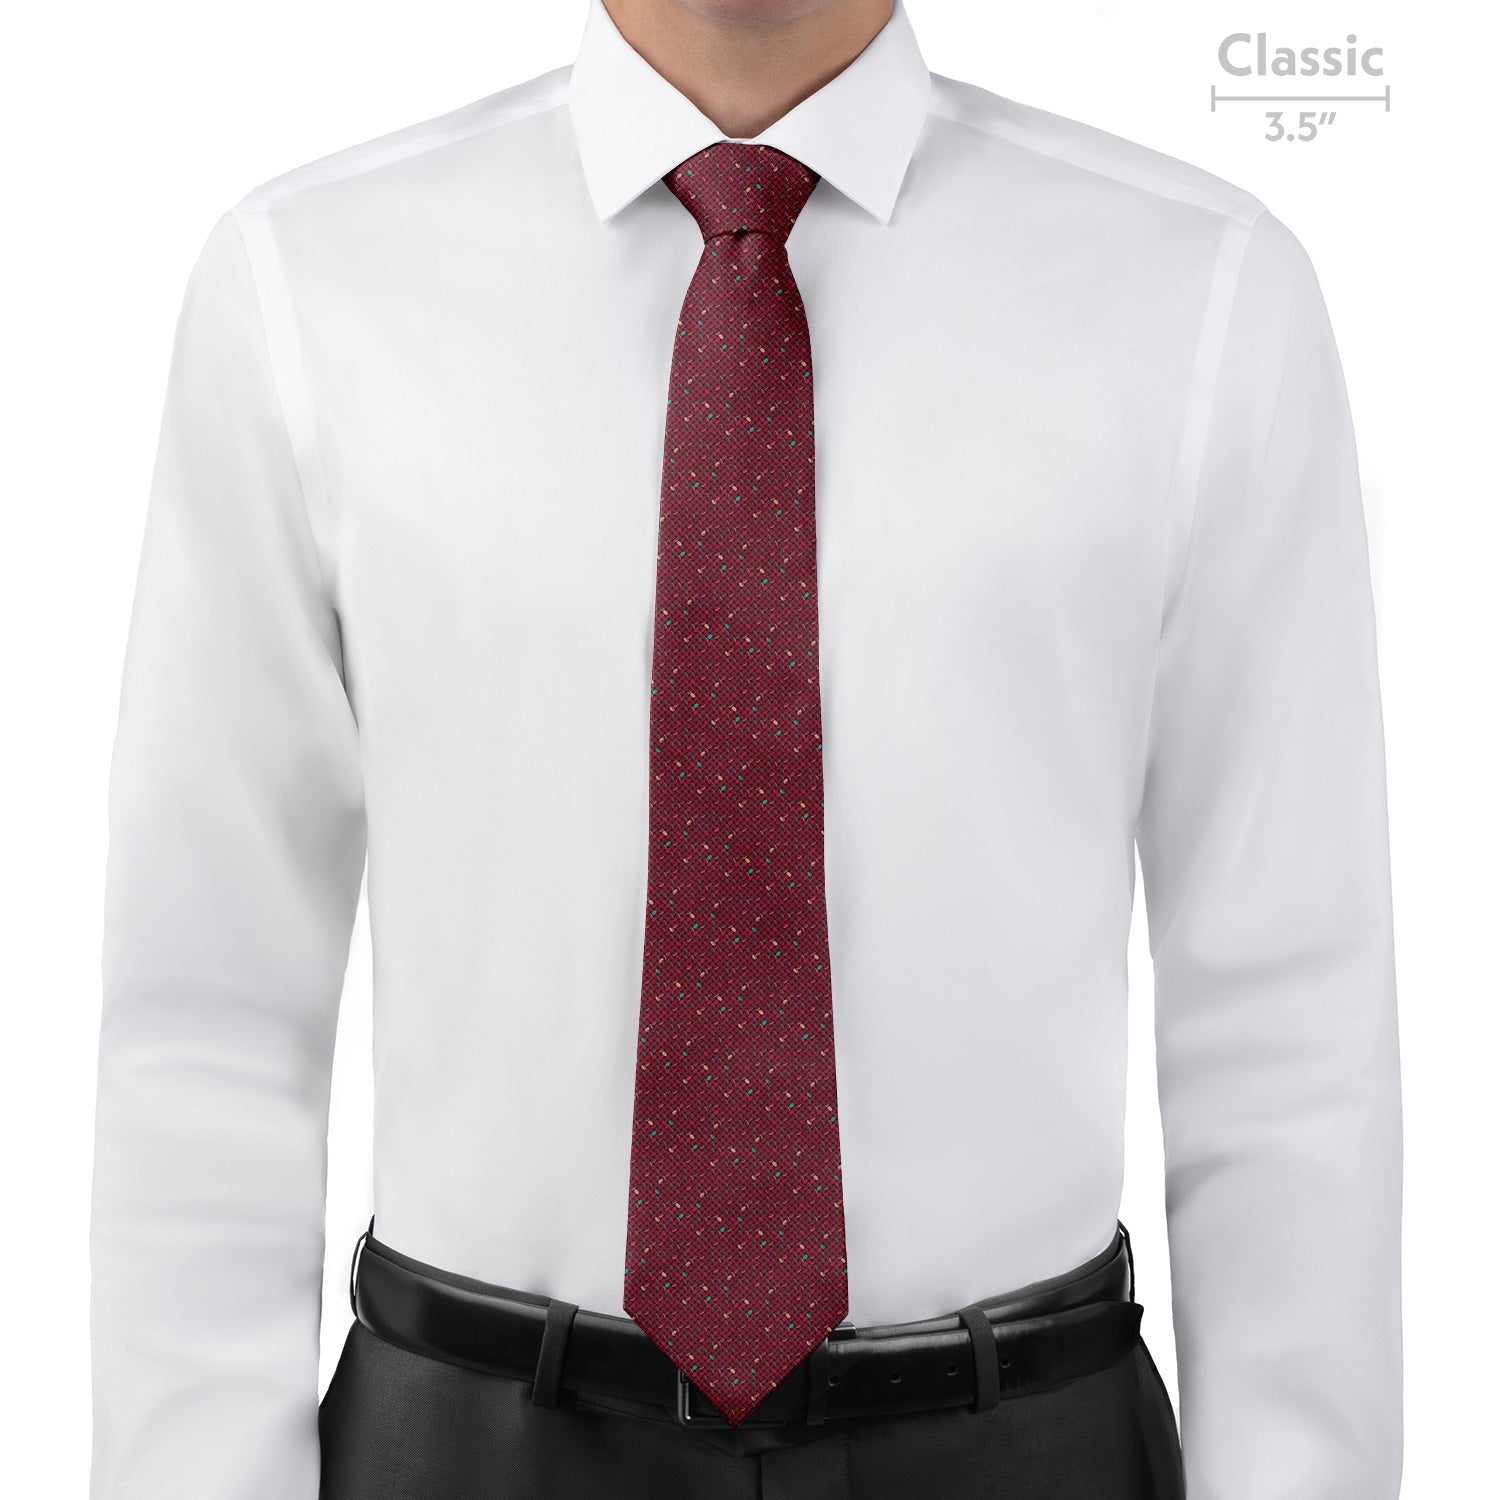 Speckled Necktie - Classic 3.5" -  - Knotty Tie Co.